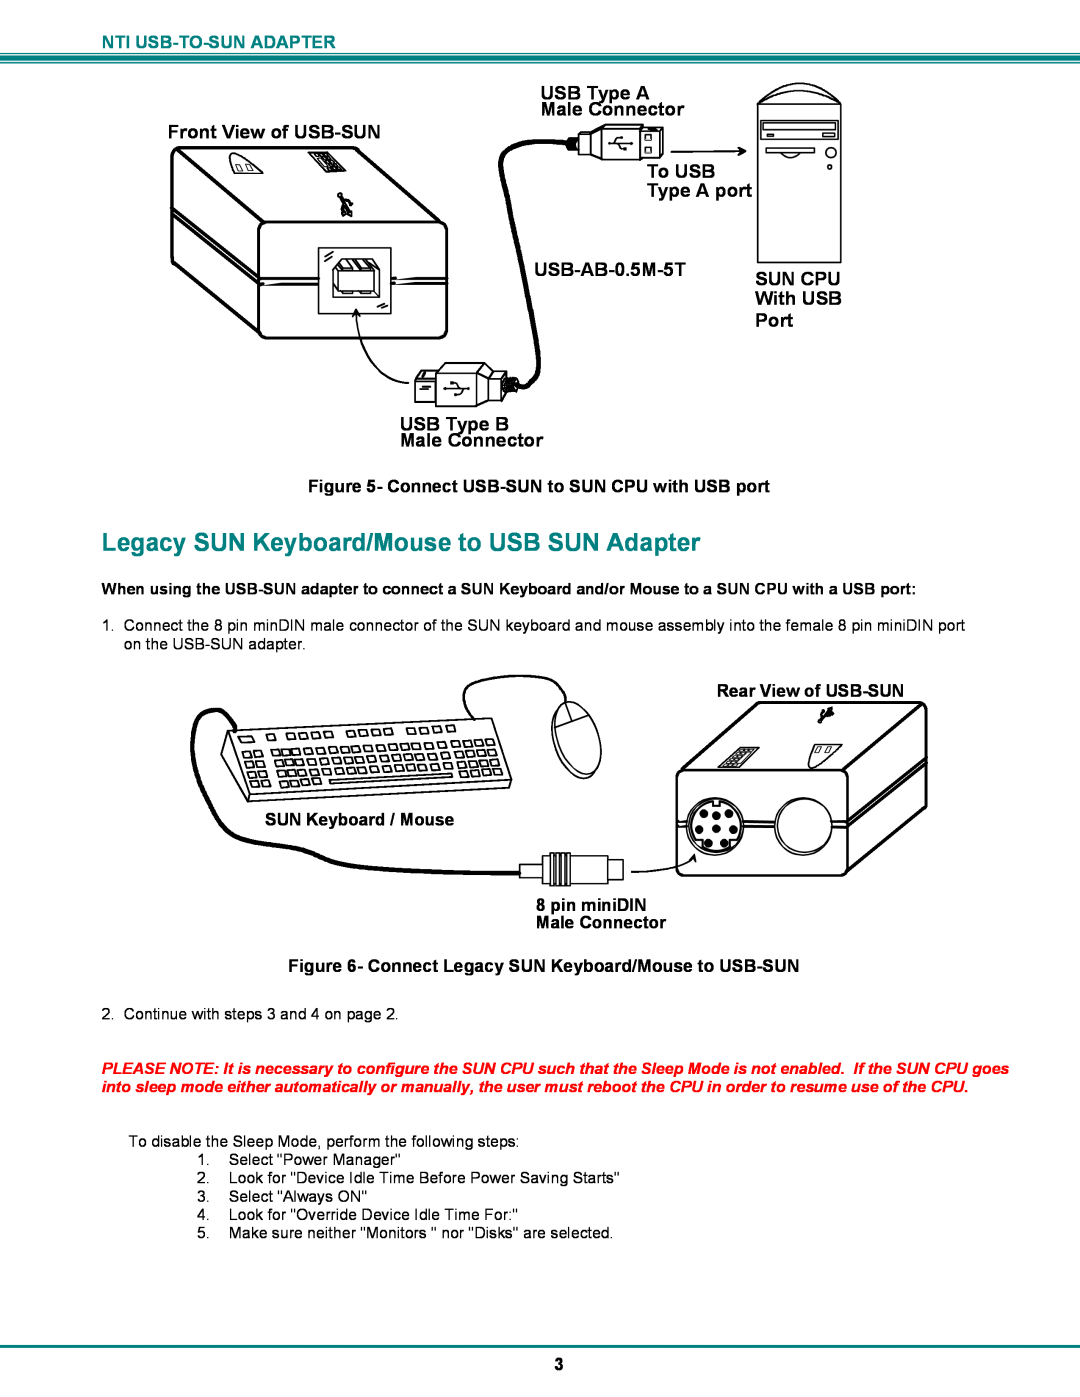 Network Technologies MAN015 installation manual Legacy SUN Keyboard/Mouse to USB SUN Adapter 